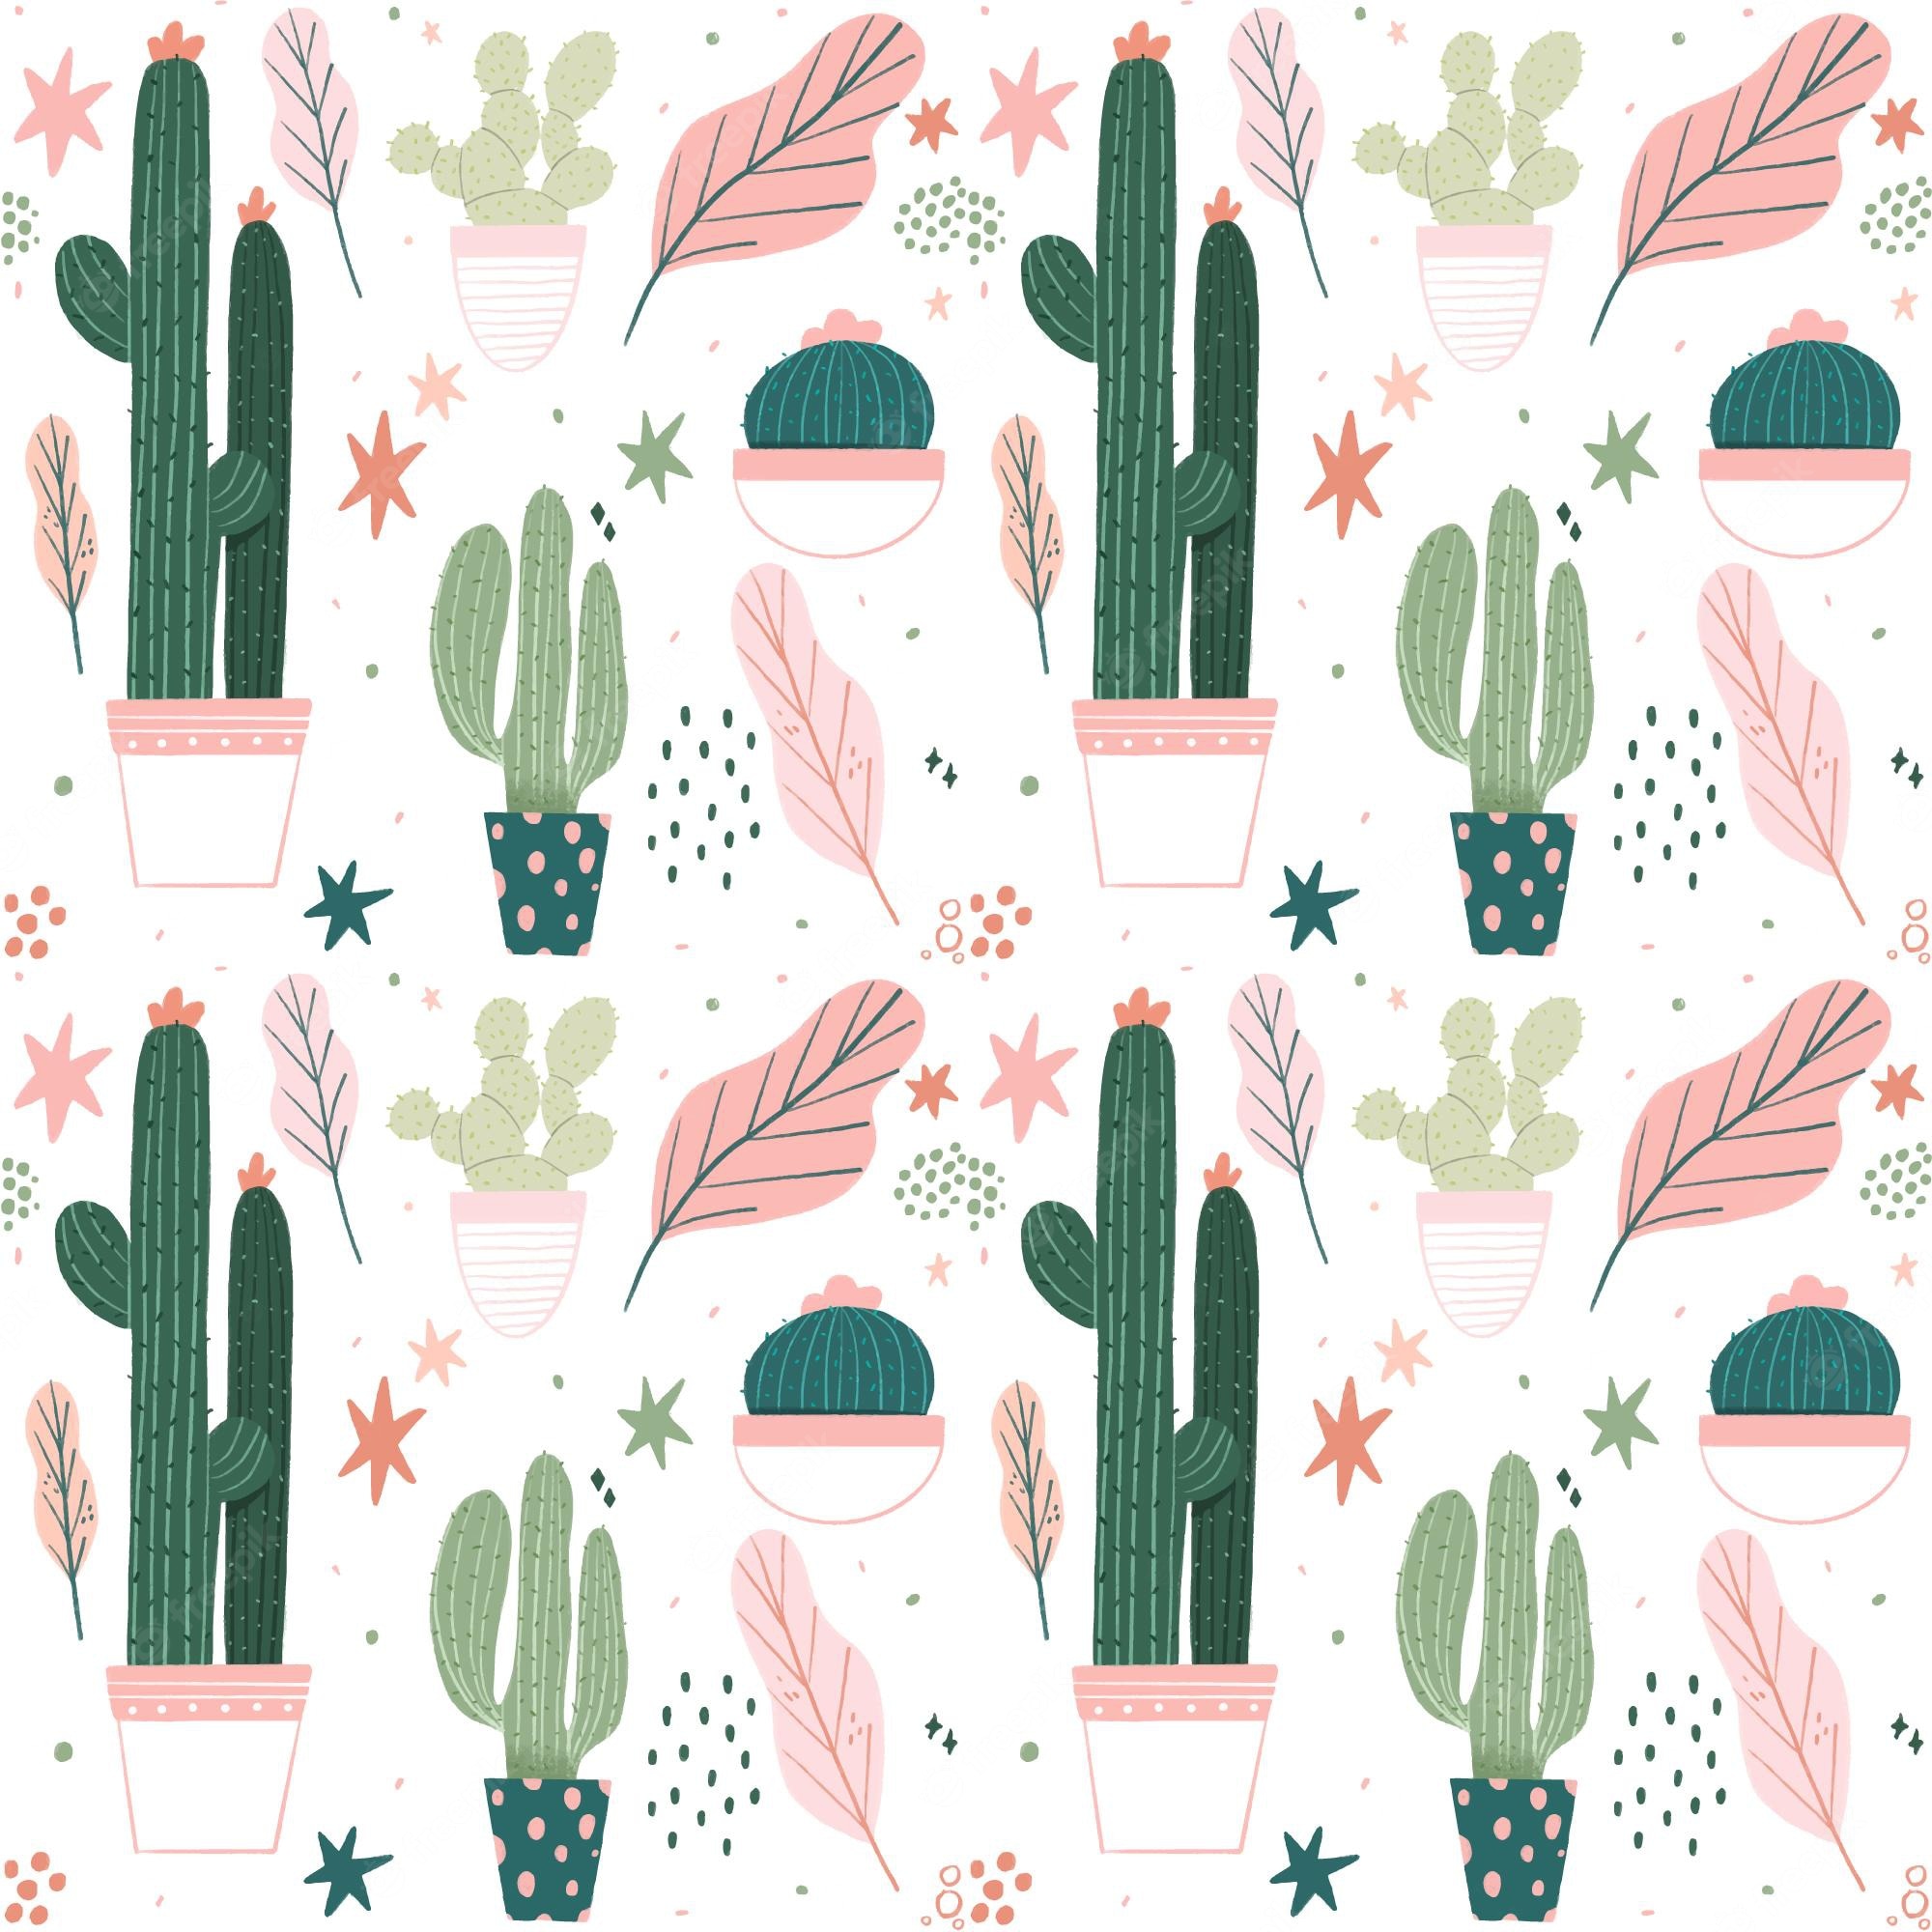 Cactus wallpaper Vectors & Illustrations for Free Download